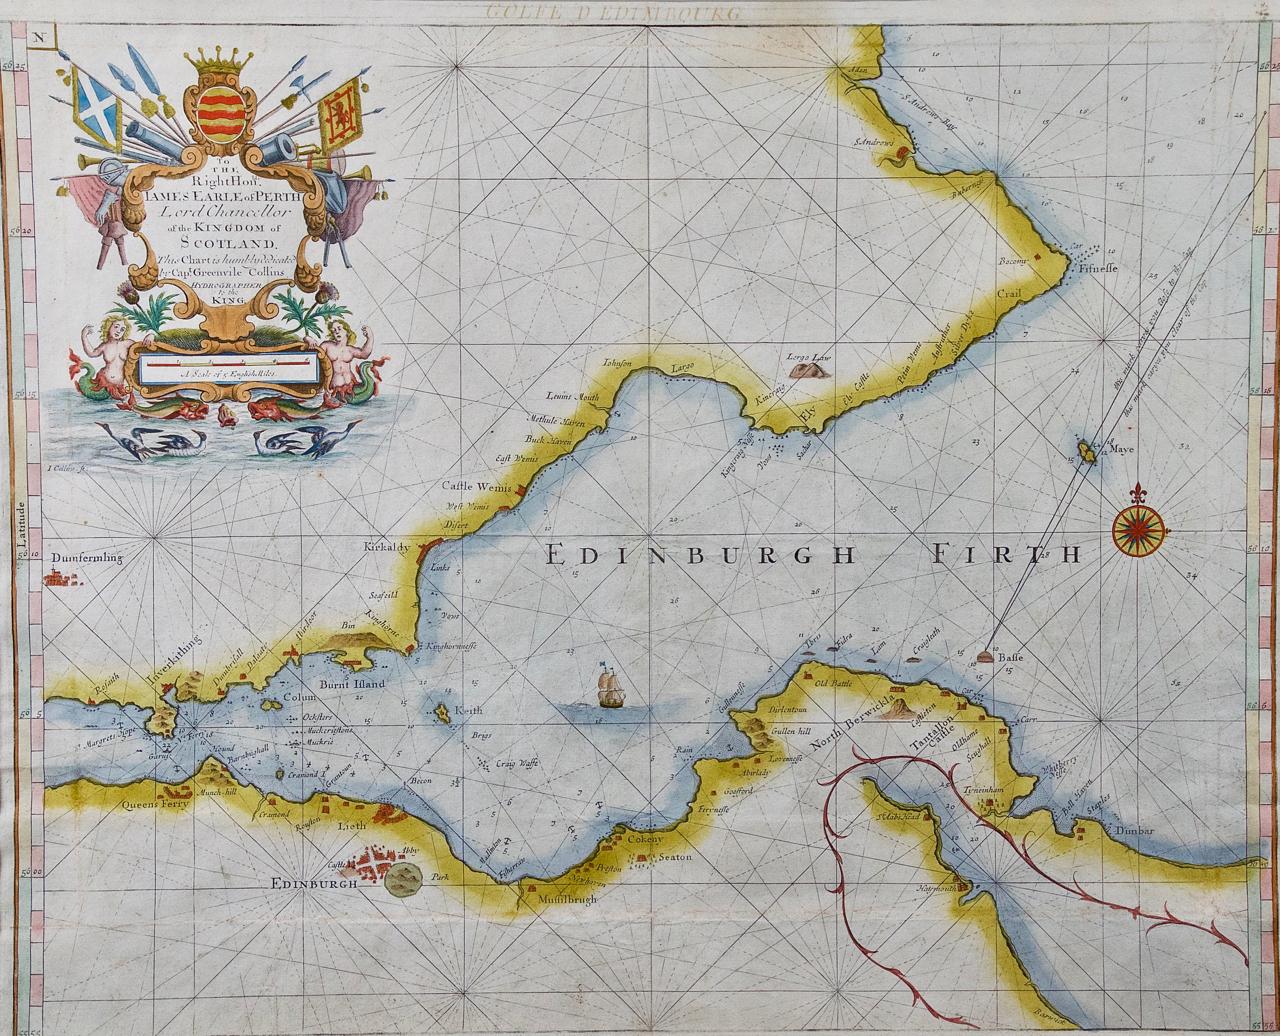 Edinburgh, Scotland: An Original 17th C. Hand-Colored Engraved Sea Chart - Print by Captain Greenvile Collins